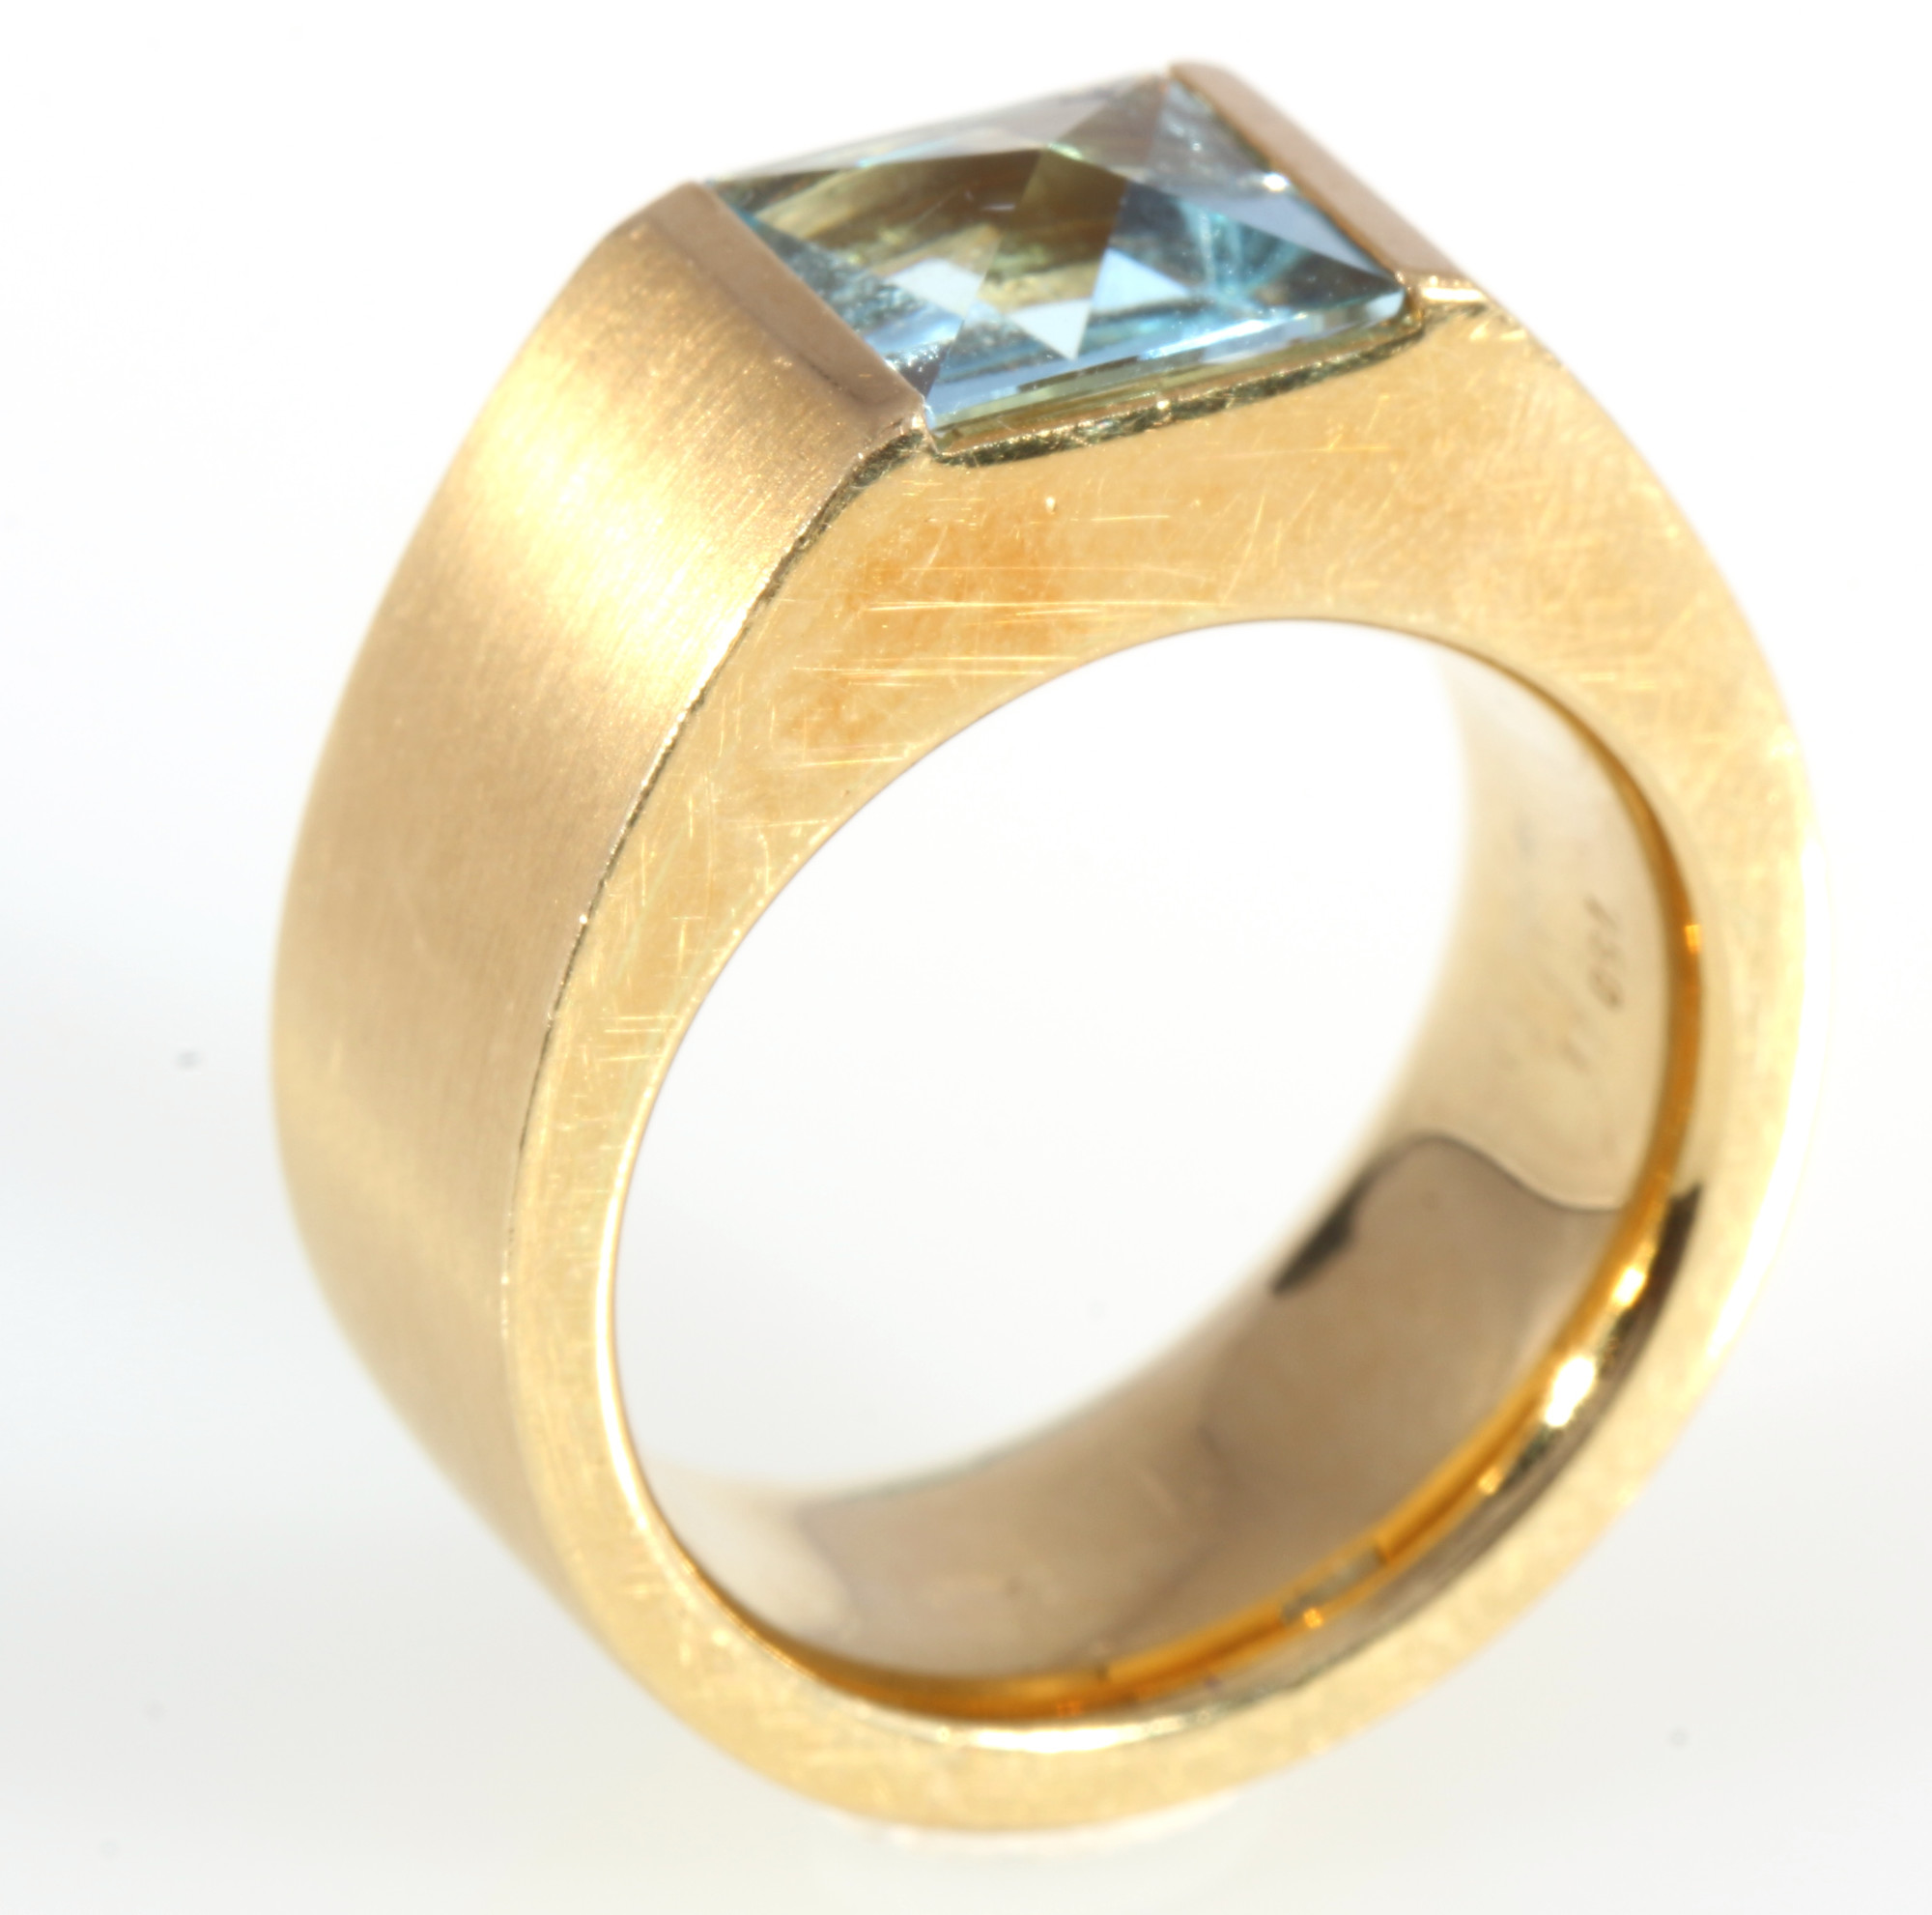 750 gold solid ring with aquamarine, 18K Gold massiver Ring mit Aquamarin, - Image 2 of 4